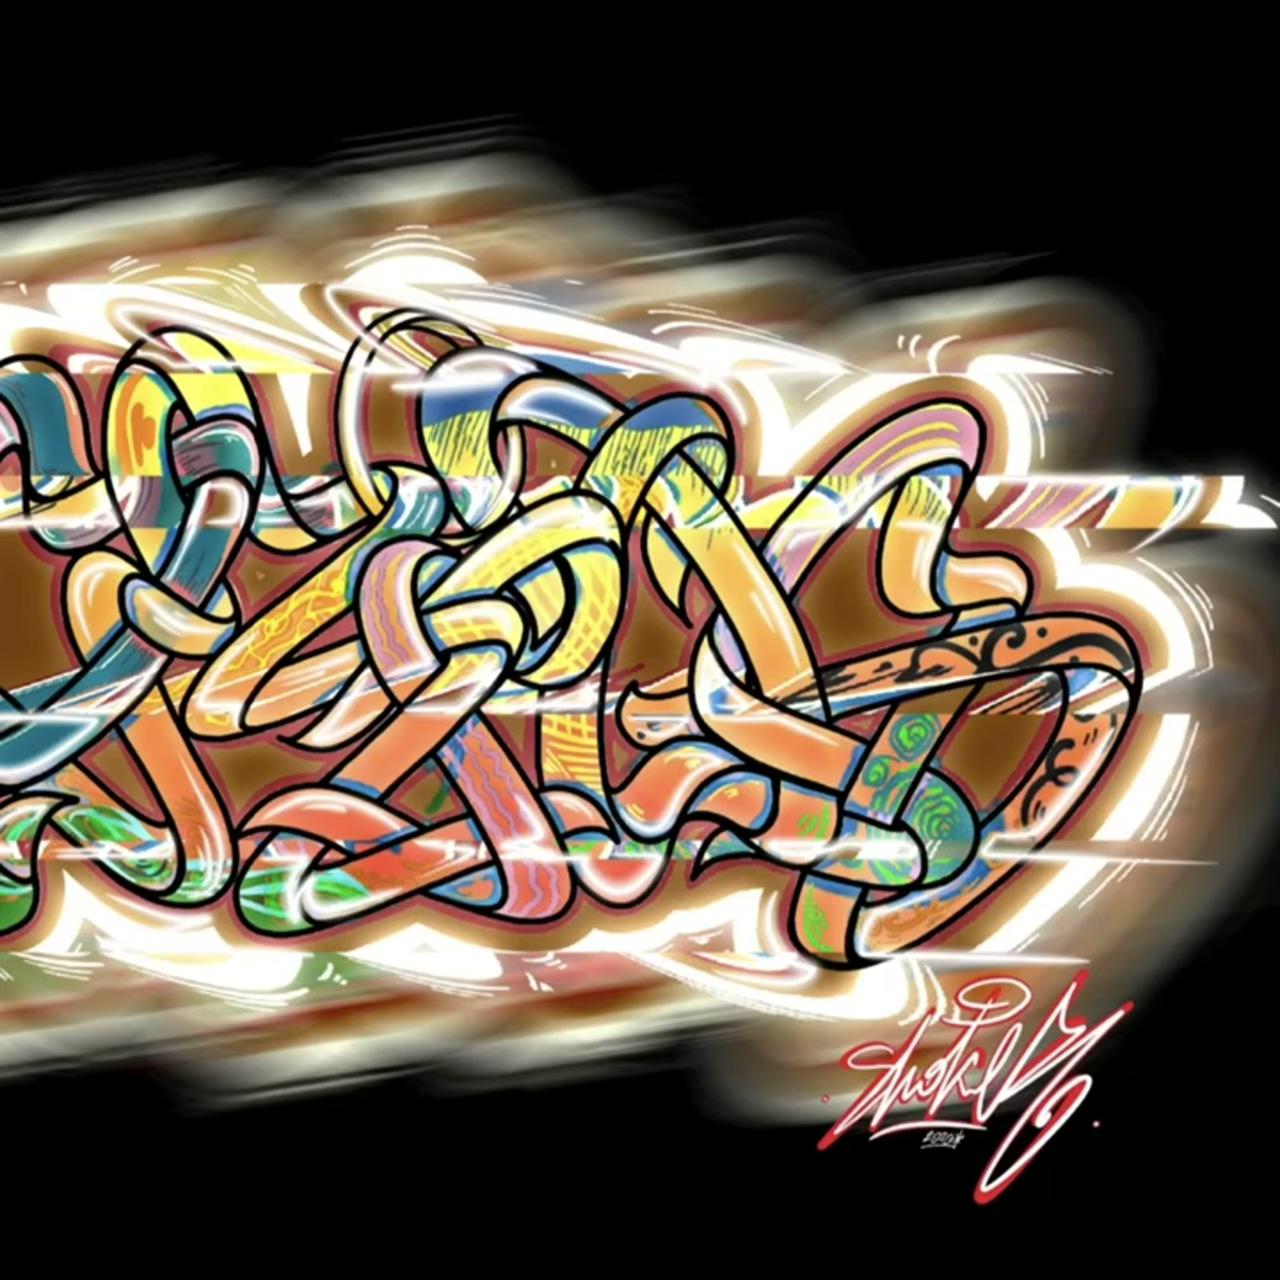 Shoker_art1, florida graffiti wild style; wild style